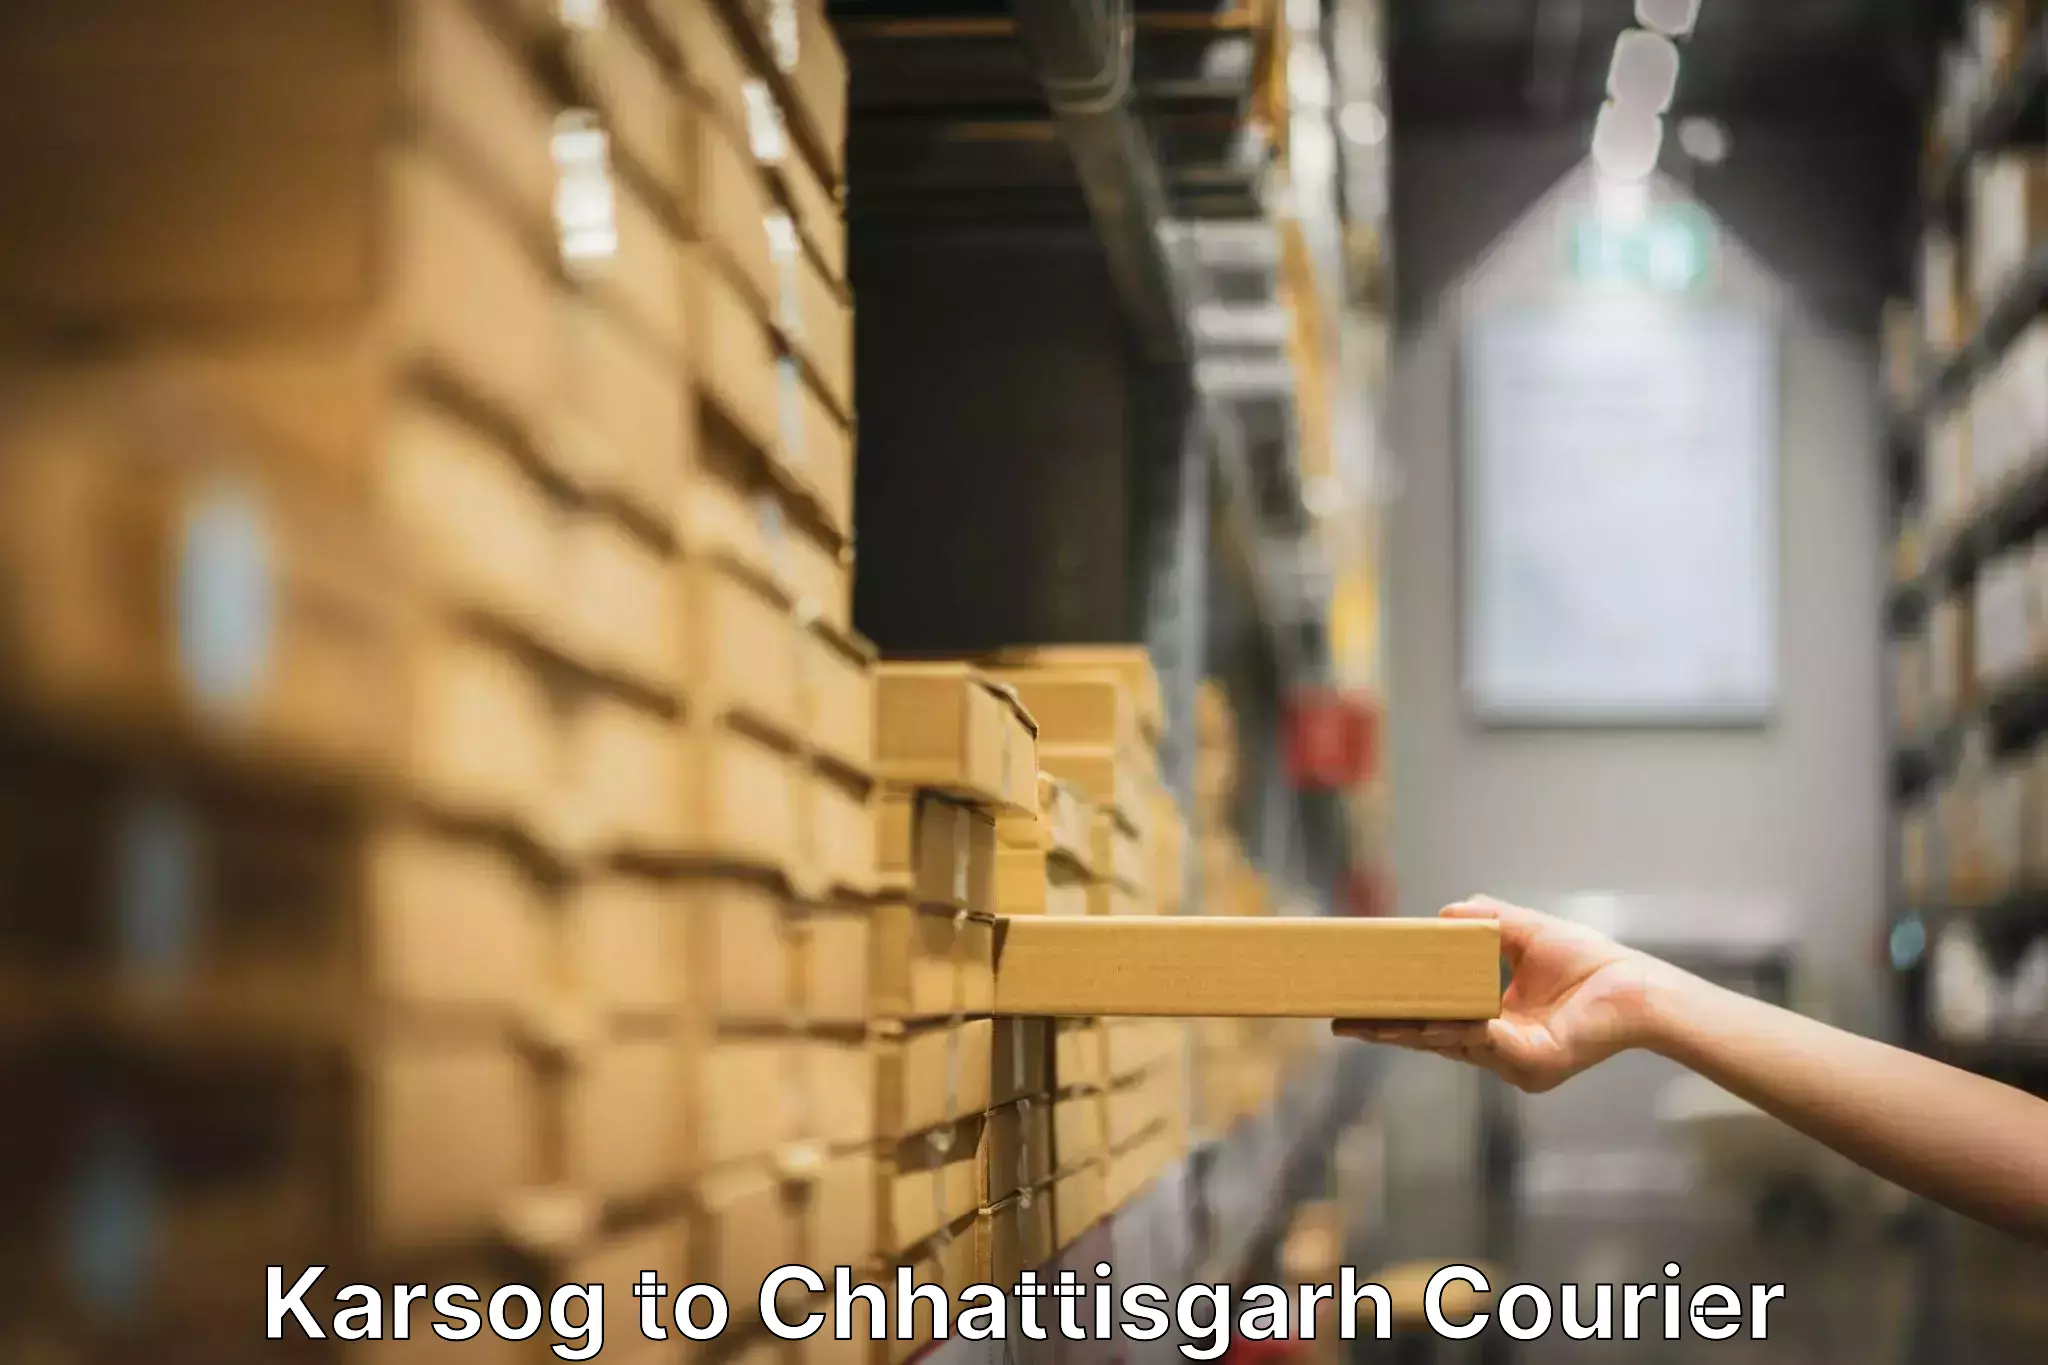 Trusted relocation experts Karsog to Chhattisgarh